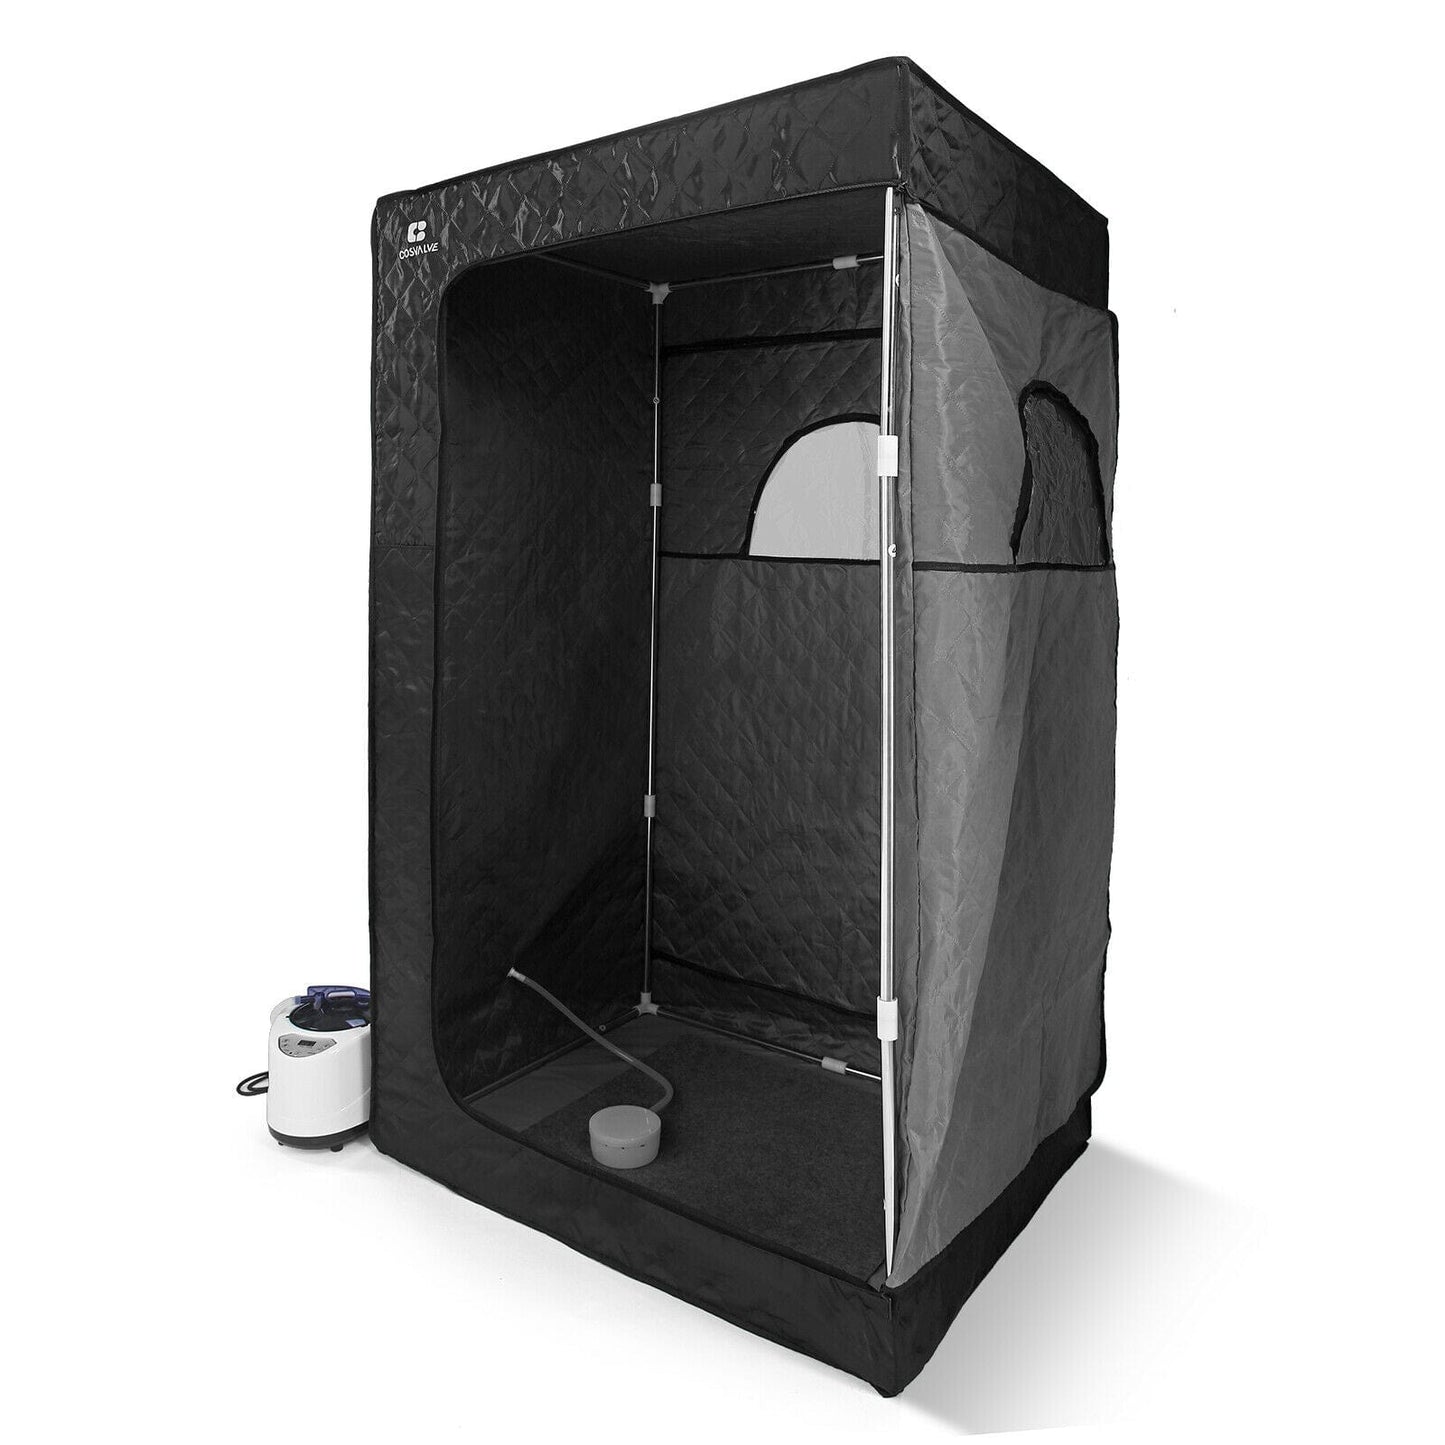 Personal Portable Indoor / Outdoor Home Steam Sauna Kit - Merchandise Plug